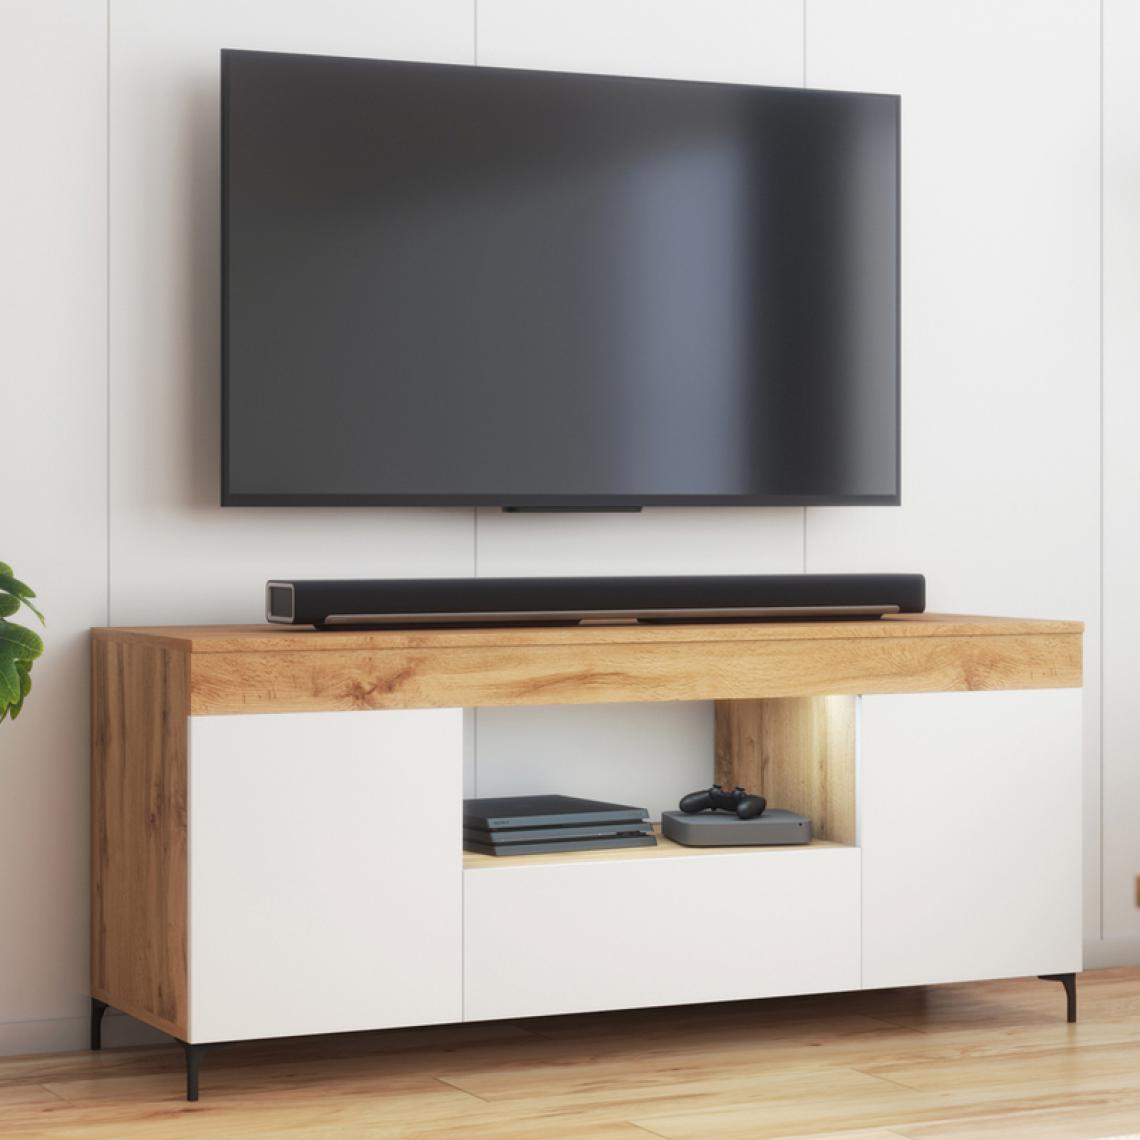 Selsey - Meuble tv avec LED - GUSTO - 137 cm - lancaster / blanc mat - style contemporain - Meubles TV, Hi-Fi